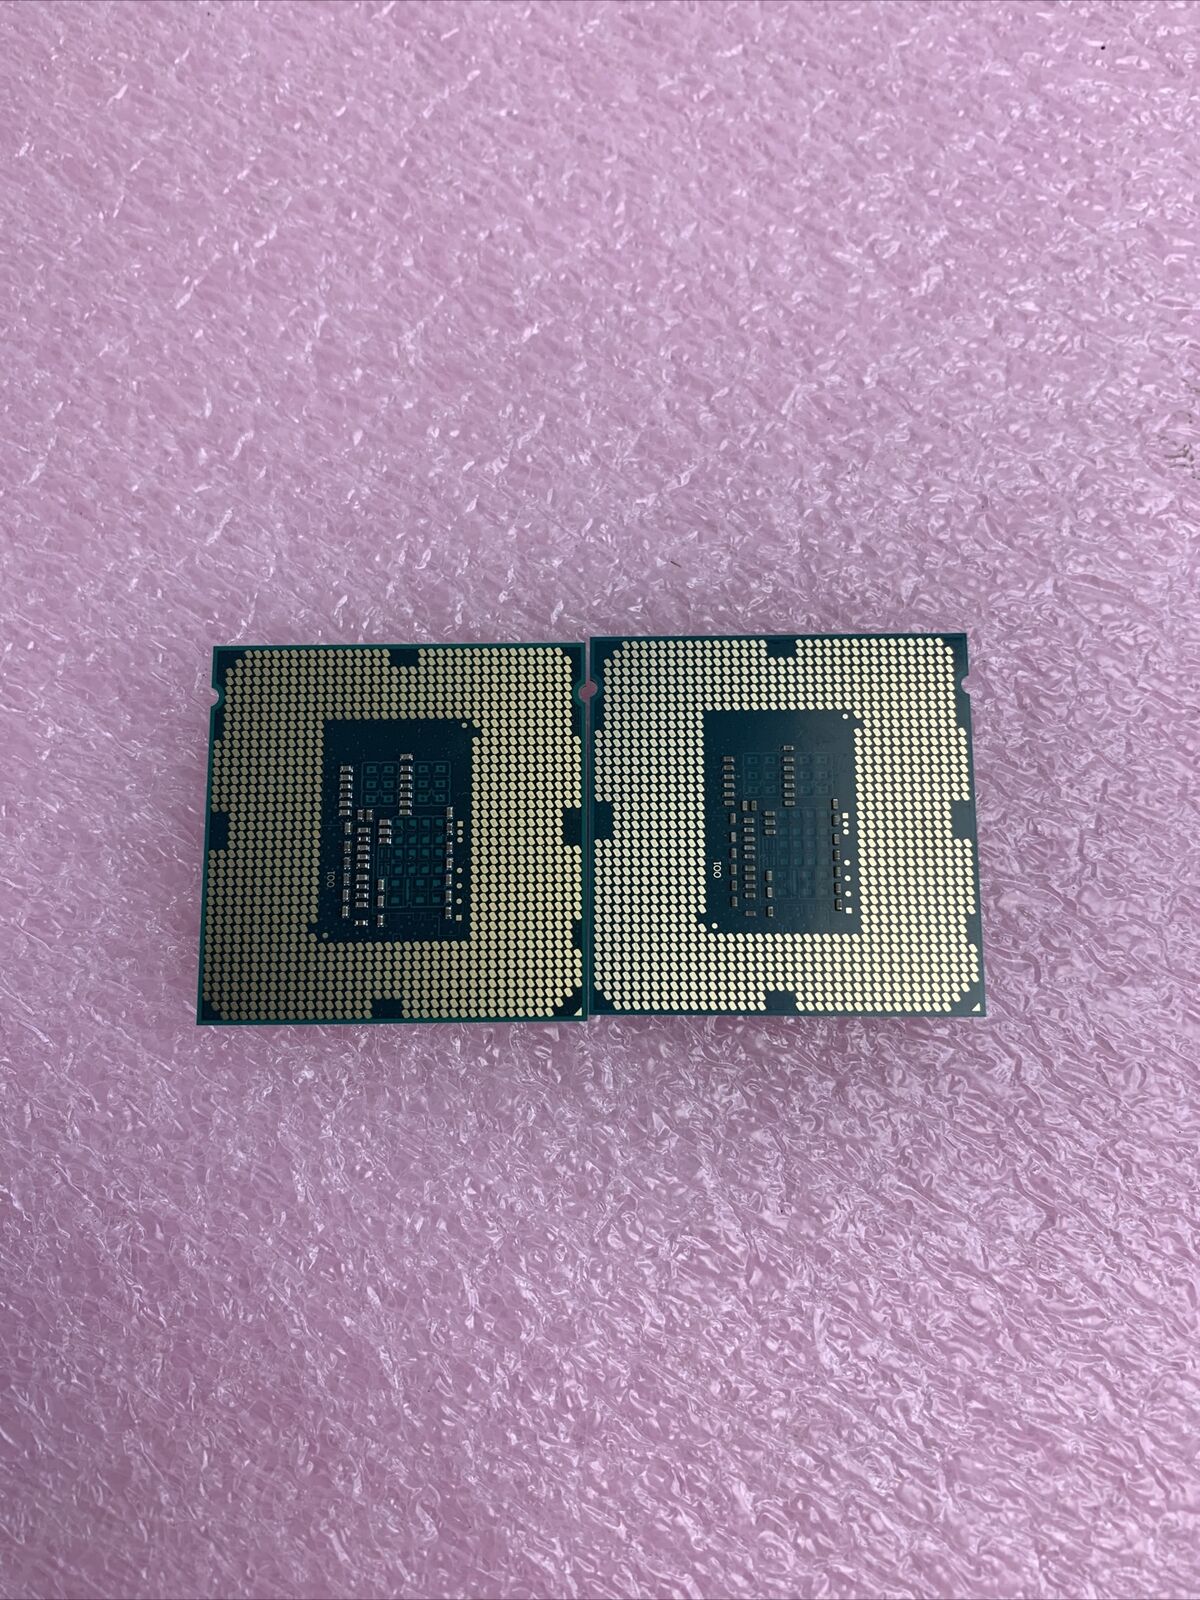 Lot of 2 intel Core i3-4160 SR1PK 3.6GHz Processors